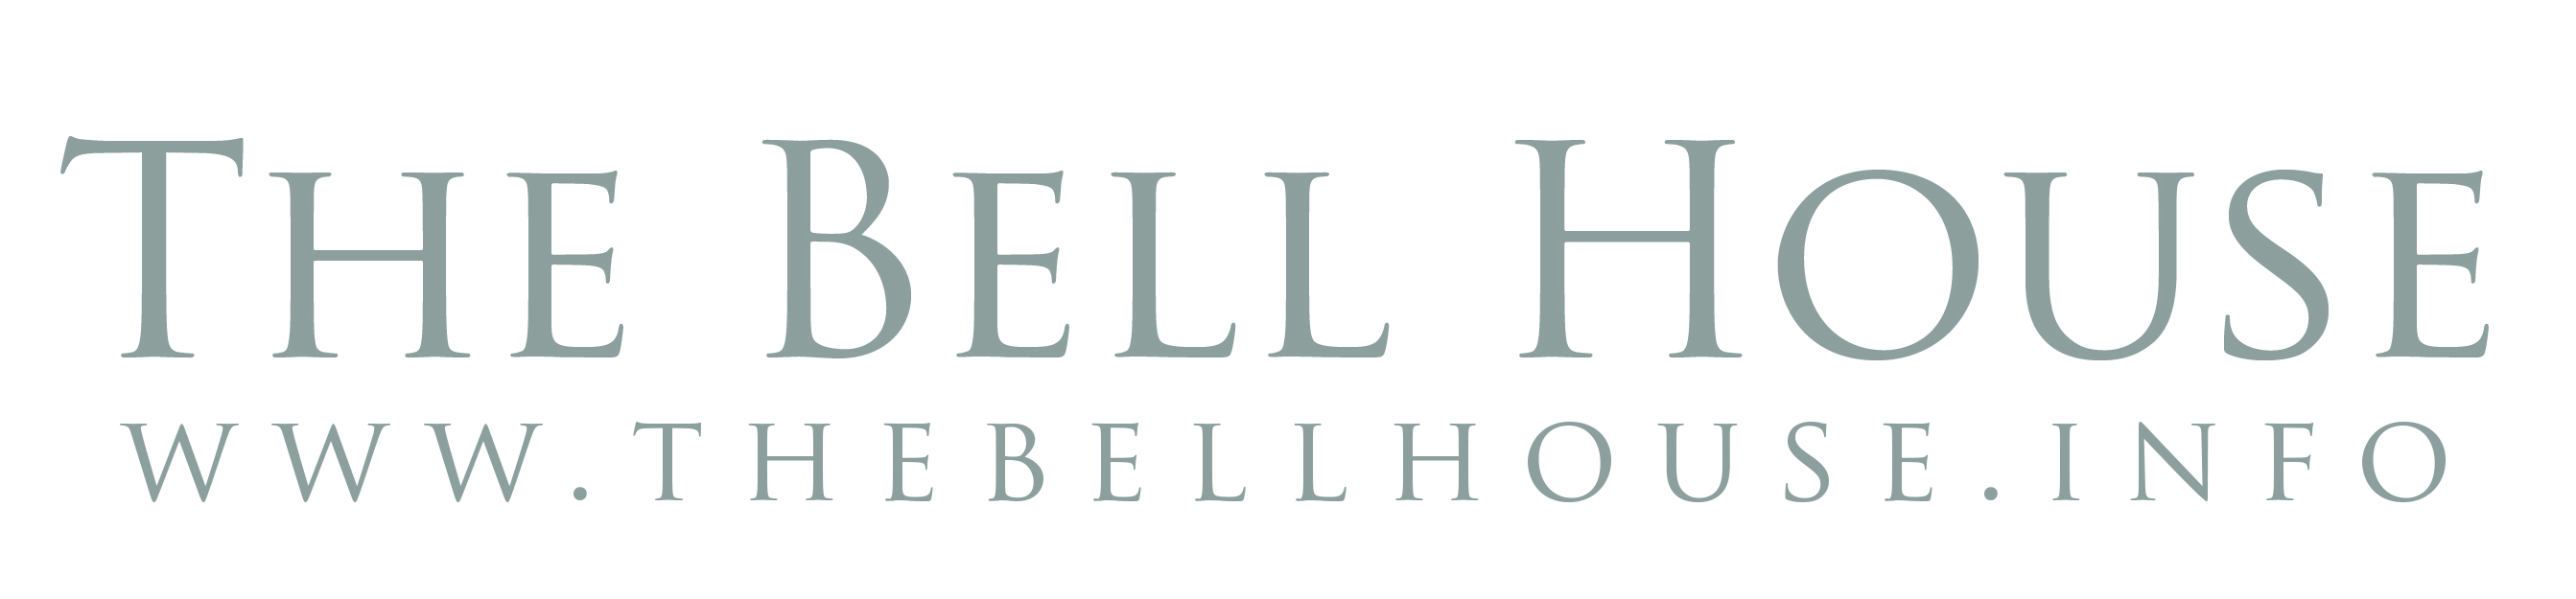 The Bell House logo